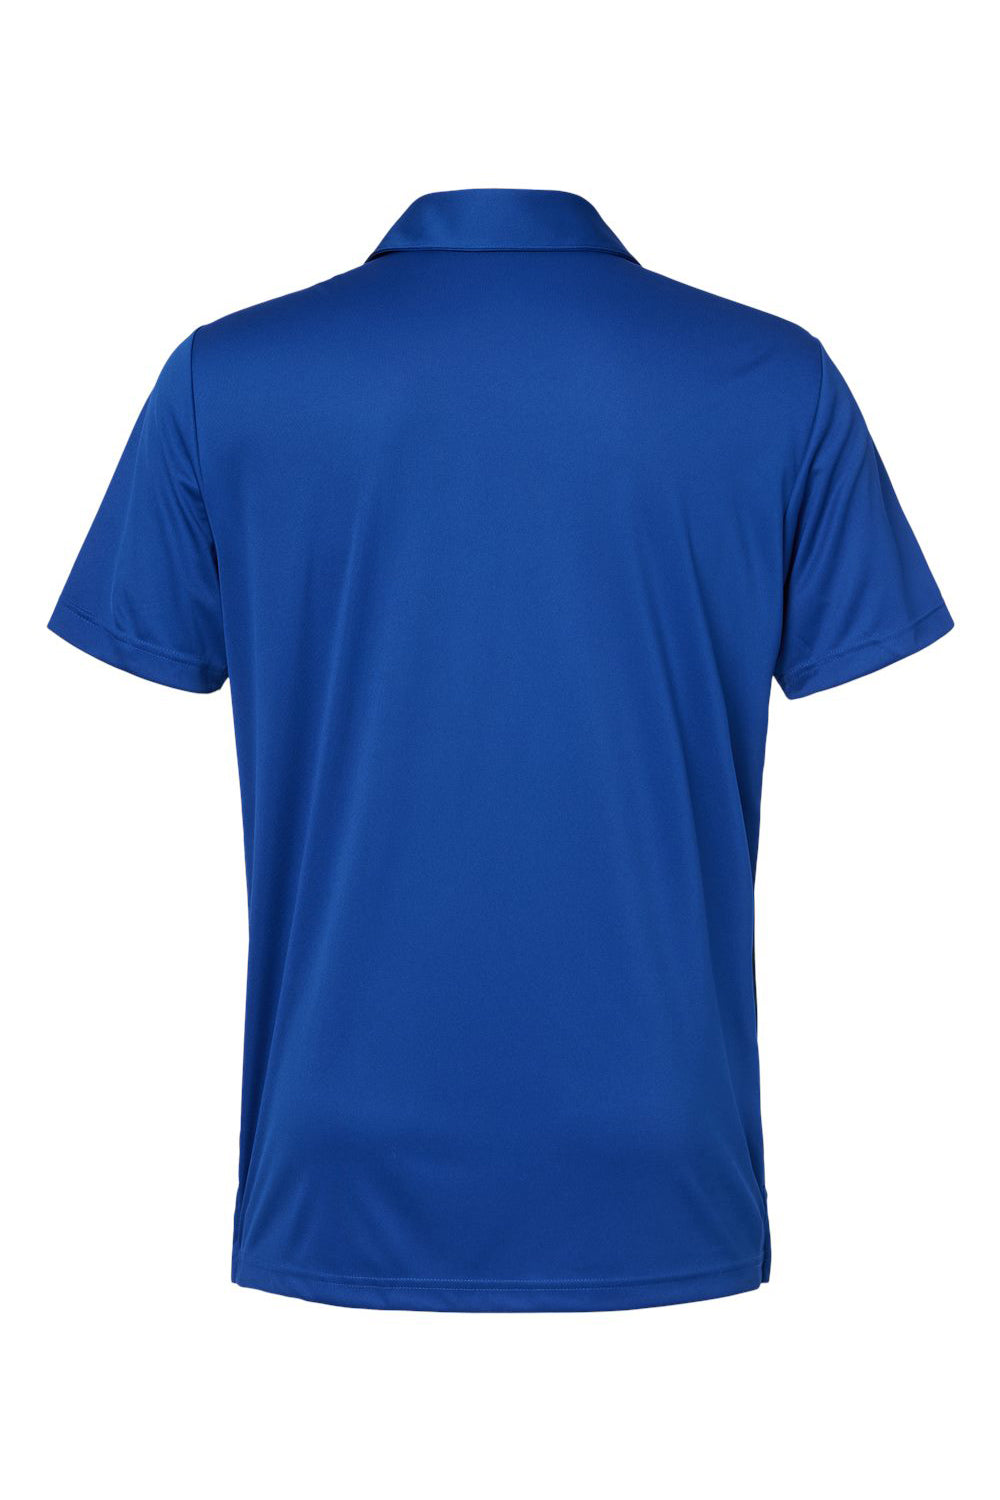 Adidas A236 Mens Merch Block Short Sleeve Polo Shirt Collegiate Royal Blue/Grey Flat Back